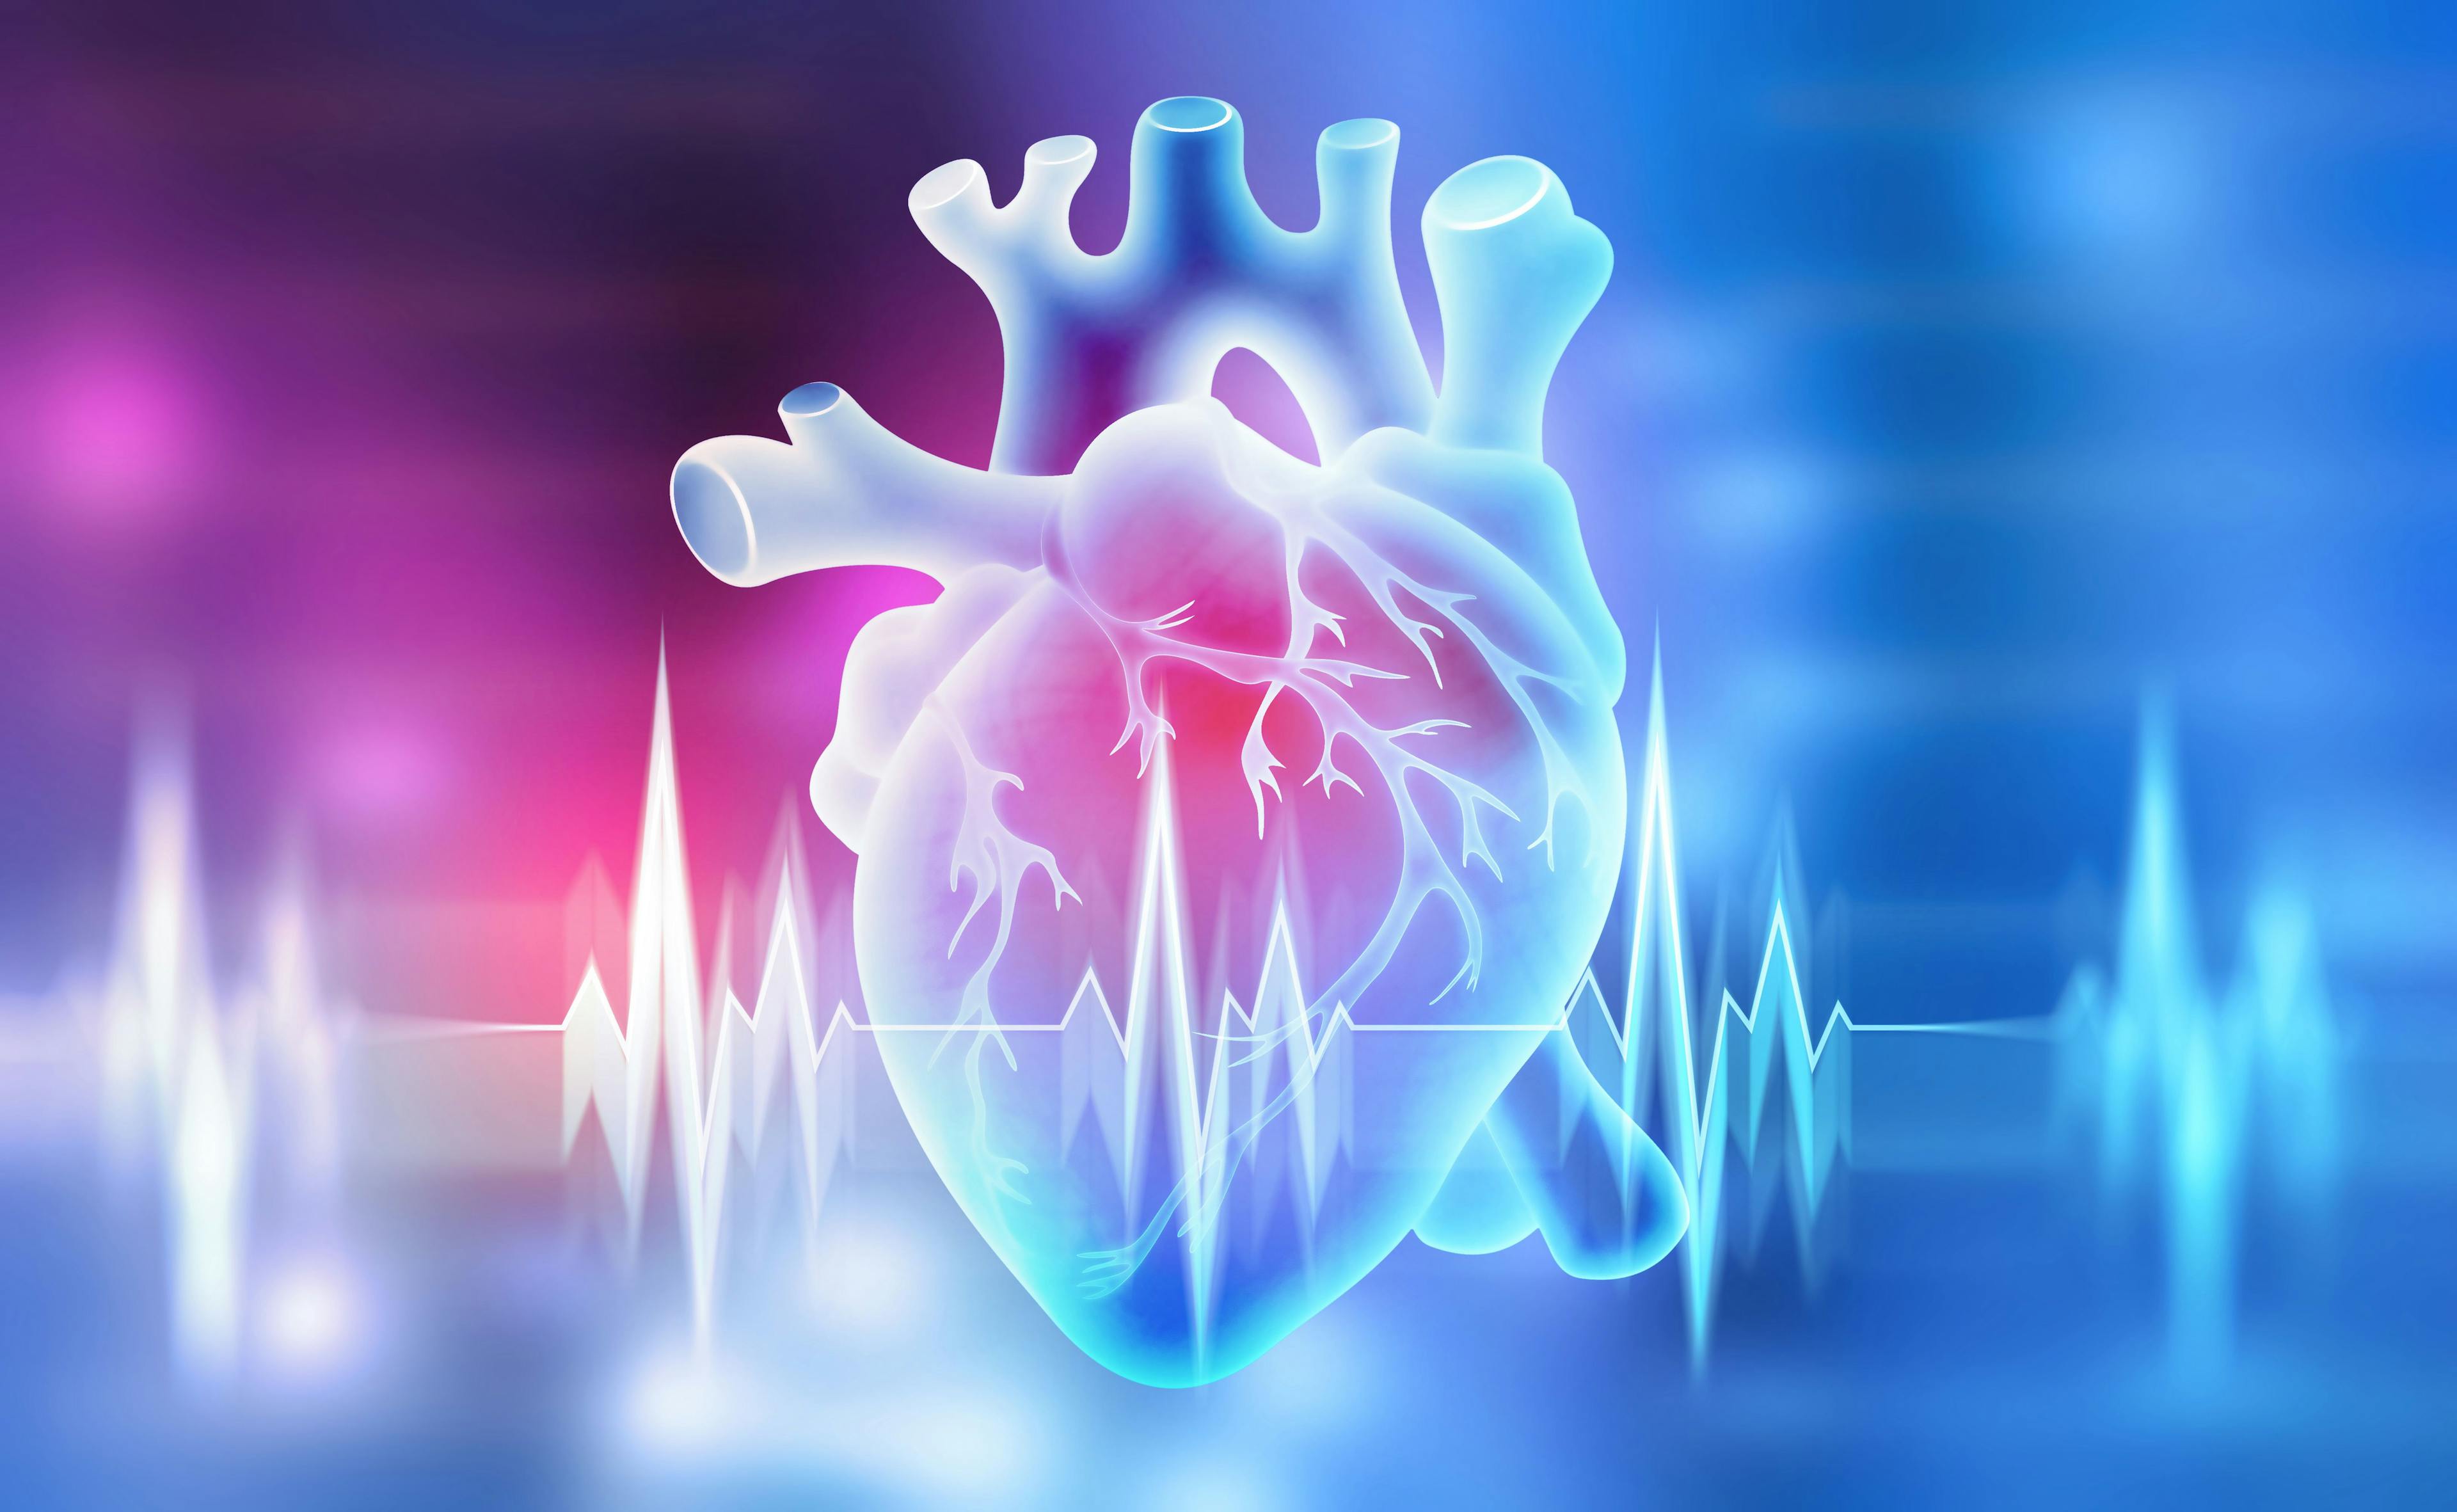 Human heart. 3D illustration on a medical background | Image Credit: Siarhei - stock.adobe.com